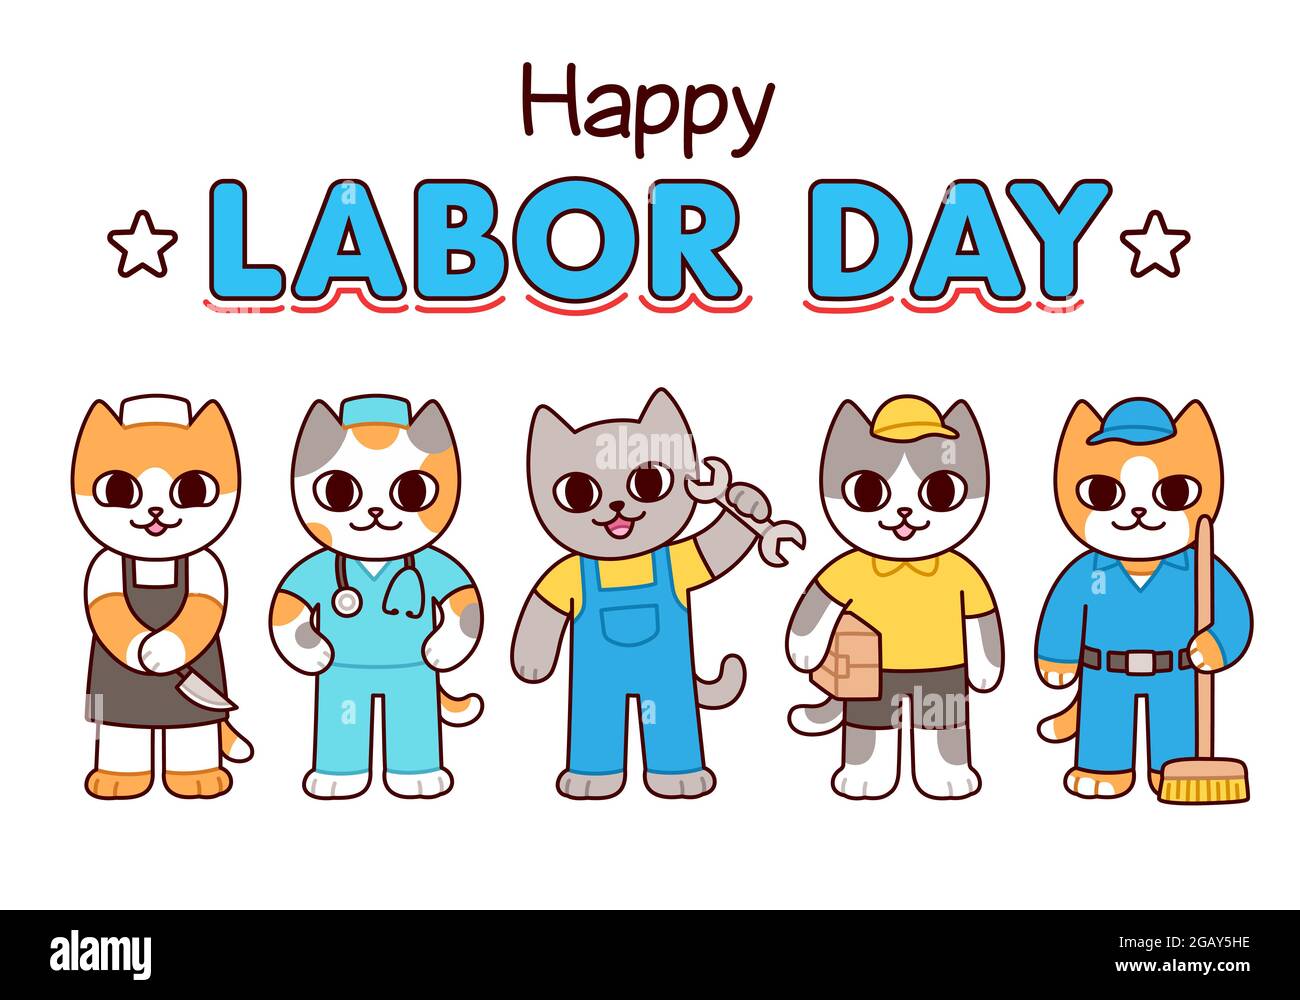 Happy Labor Day! How To Draw A Cute Cartoon Teacher 